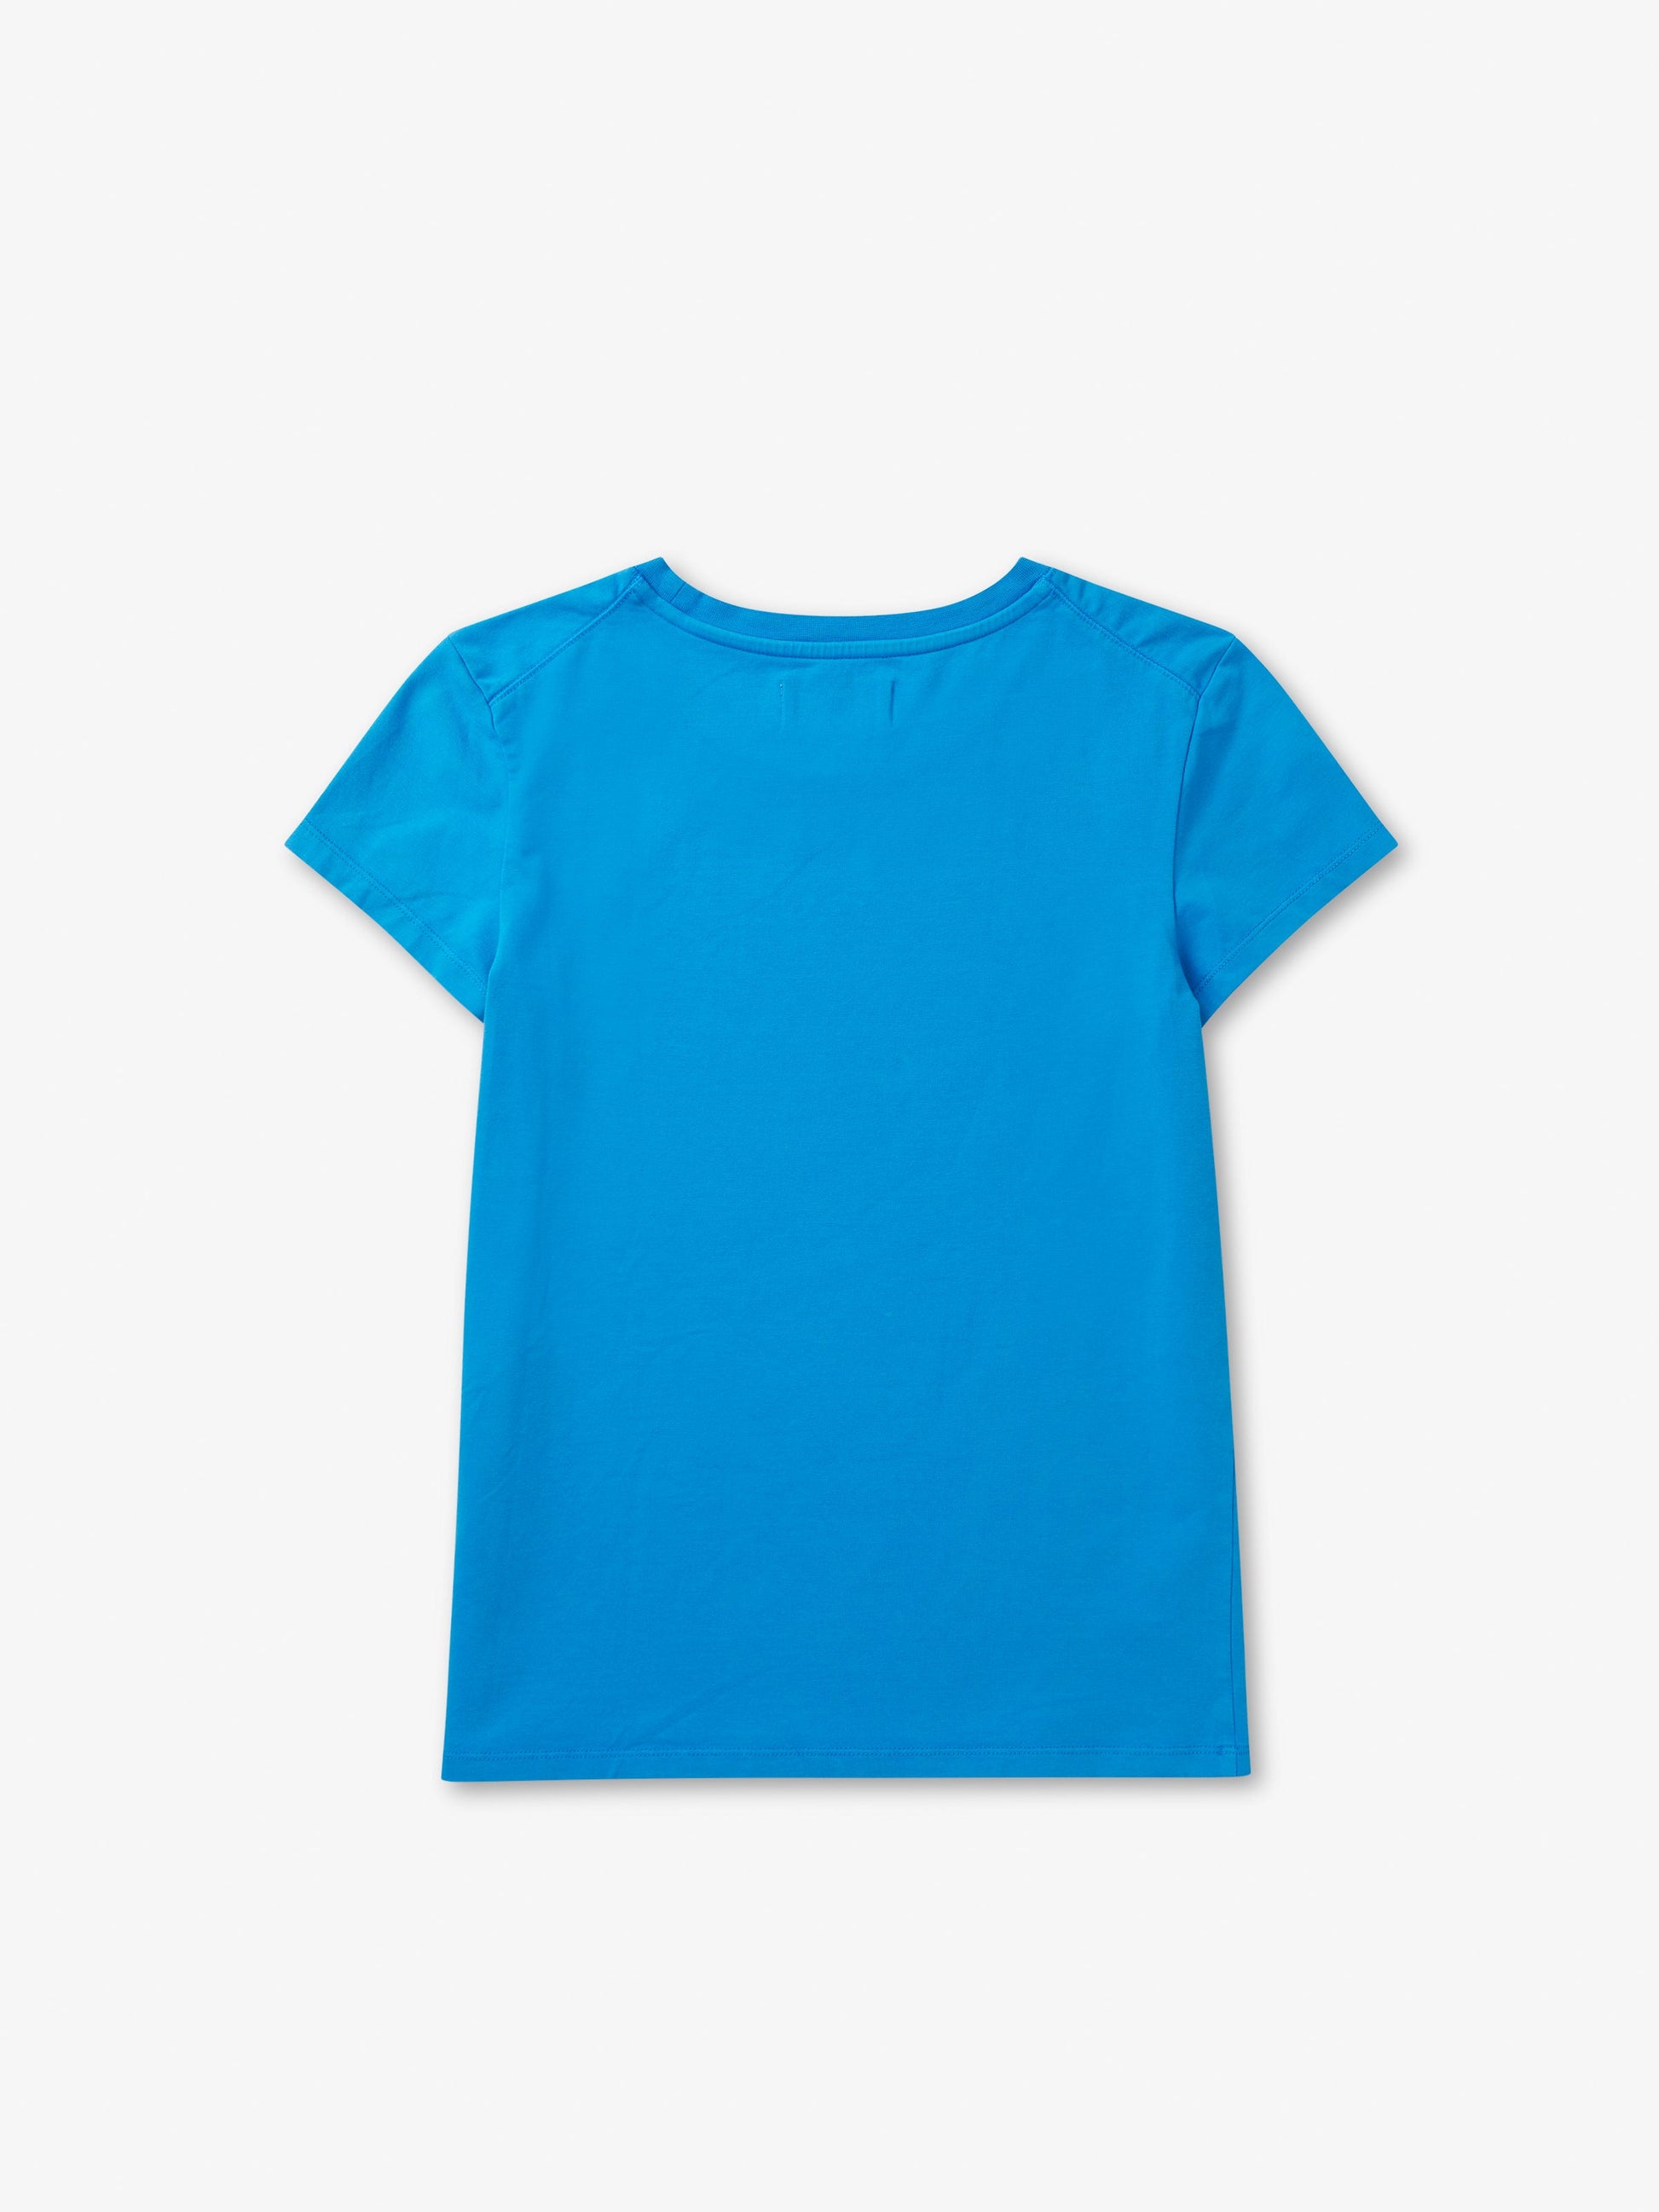 7 DAYS Womans Tee T-shirt 313 Indigo Blue